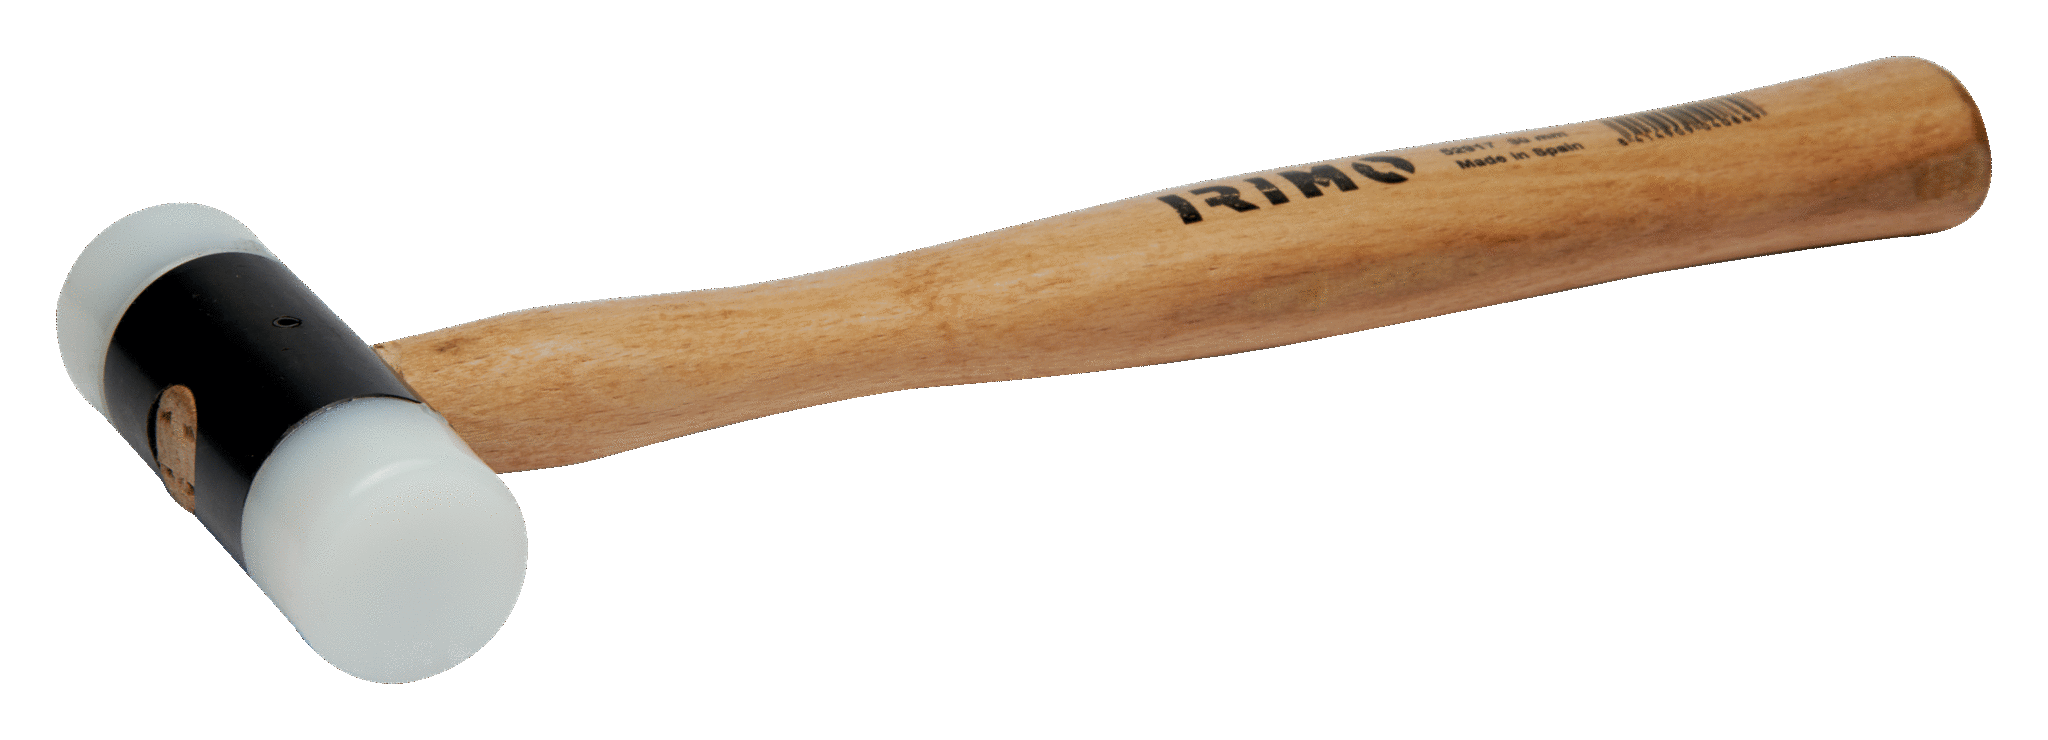 Martillo nylon mango madera, 22mm - SIPACIFICO